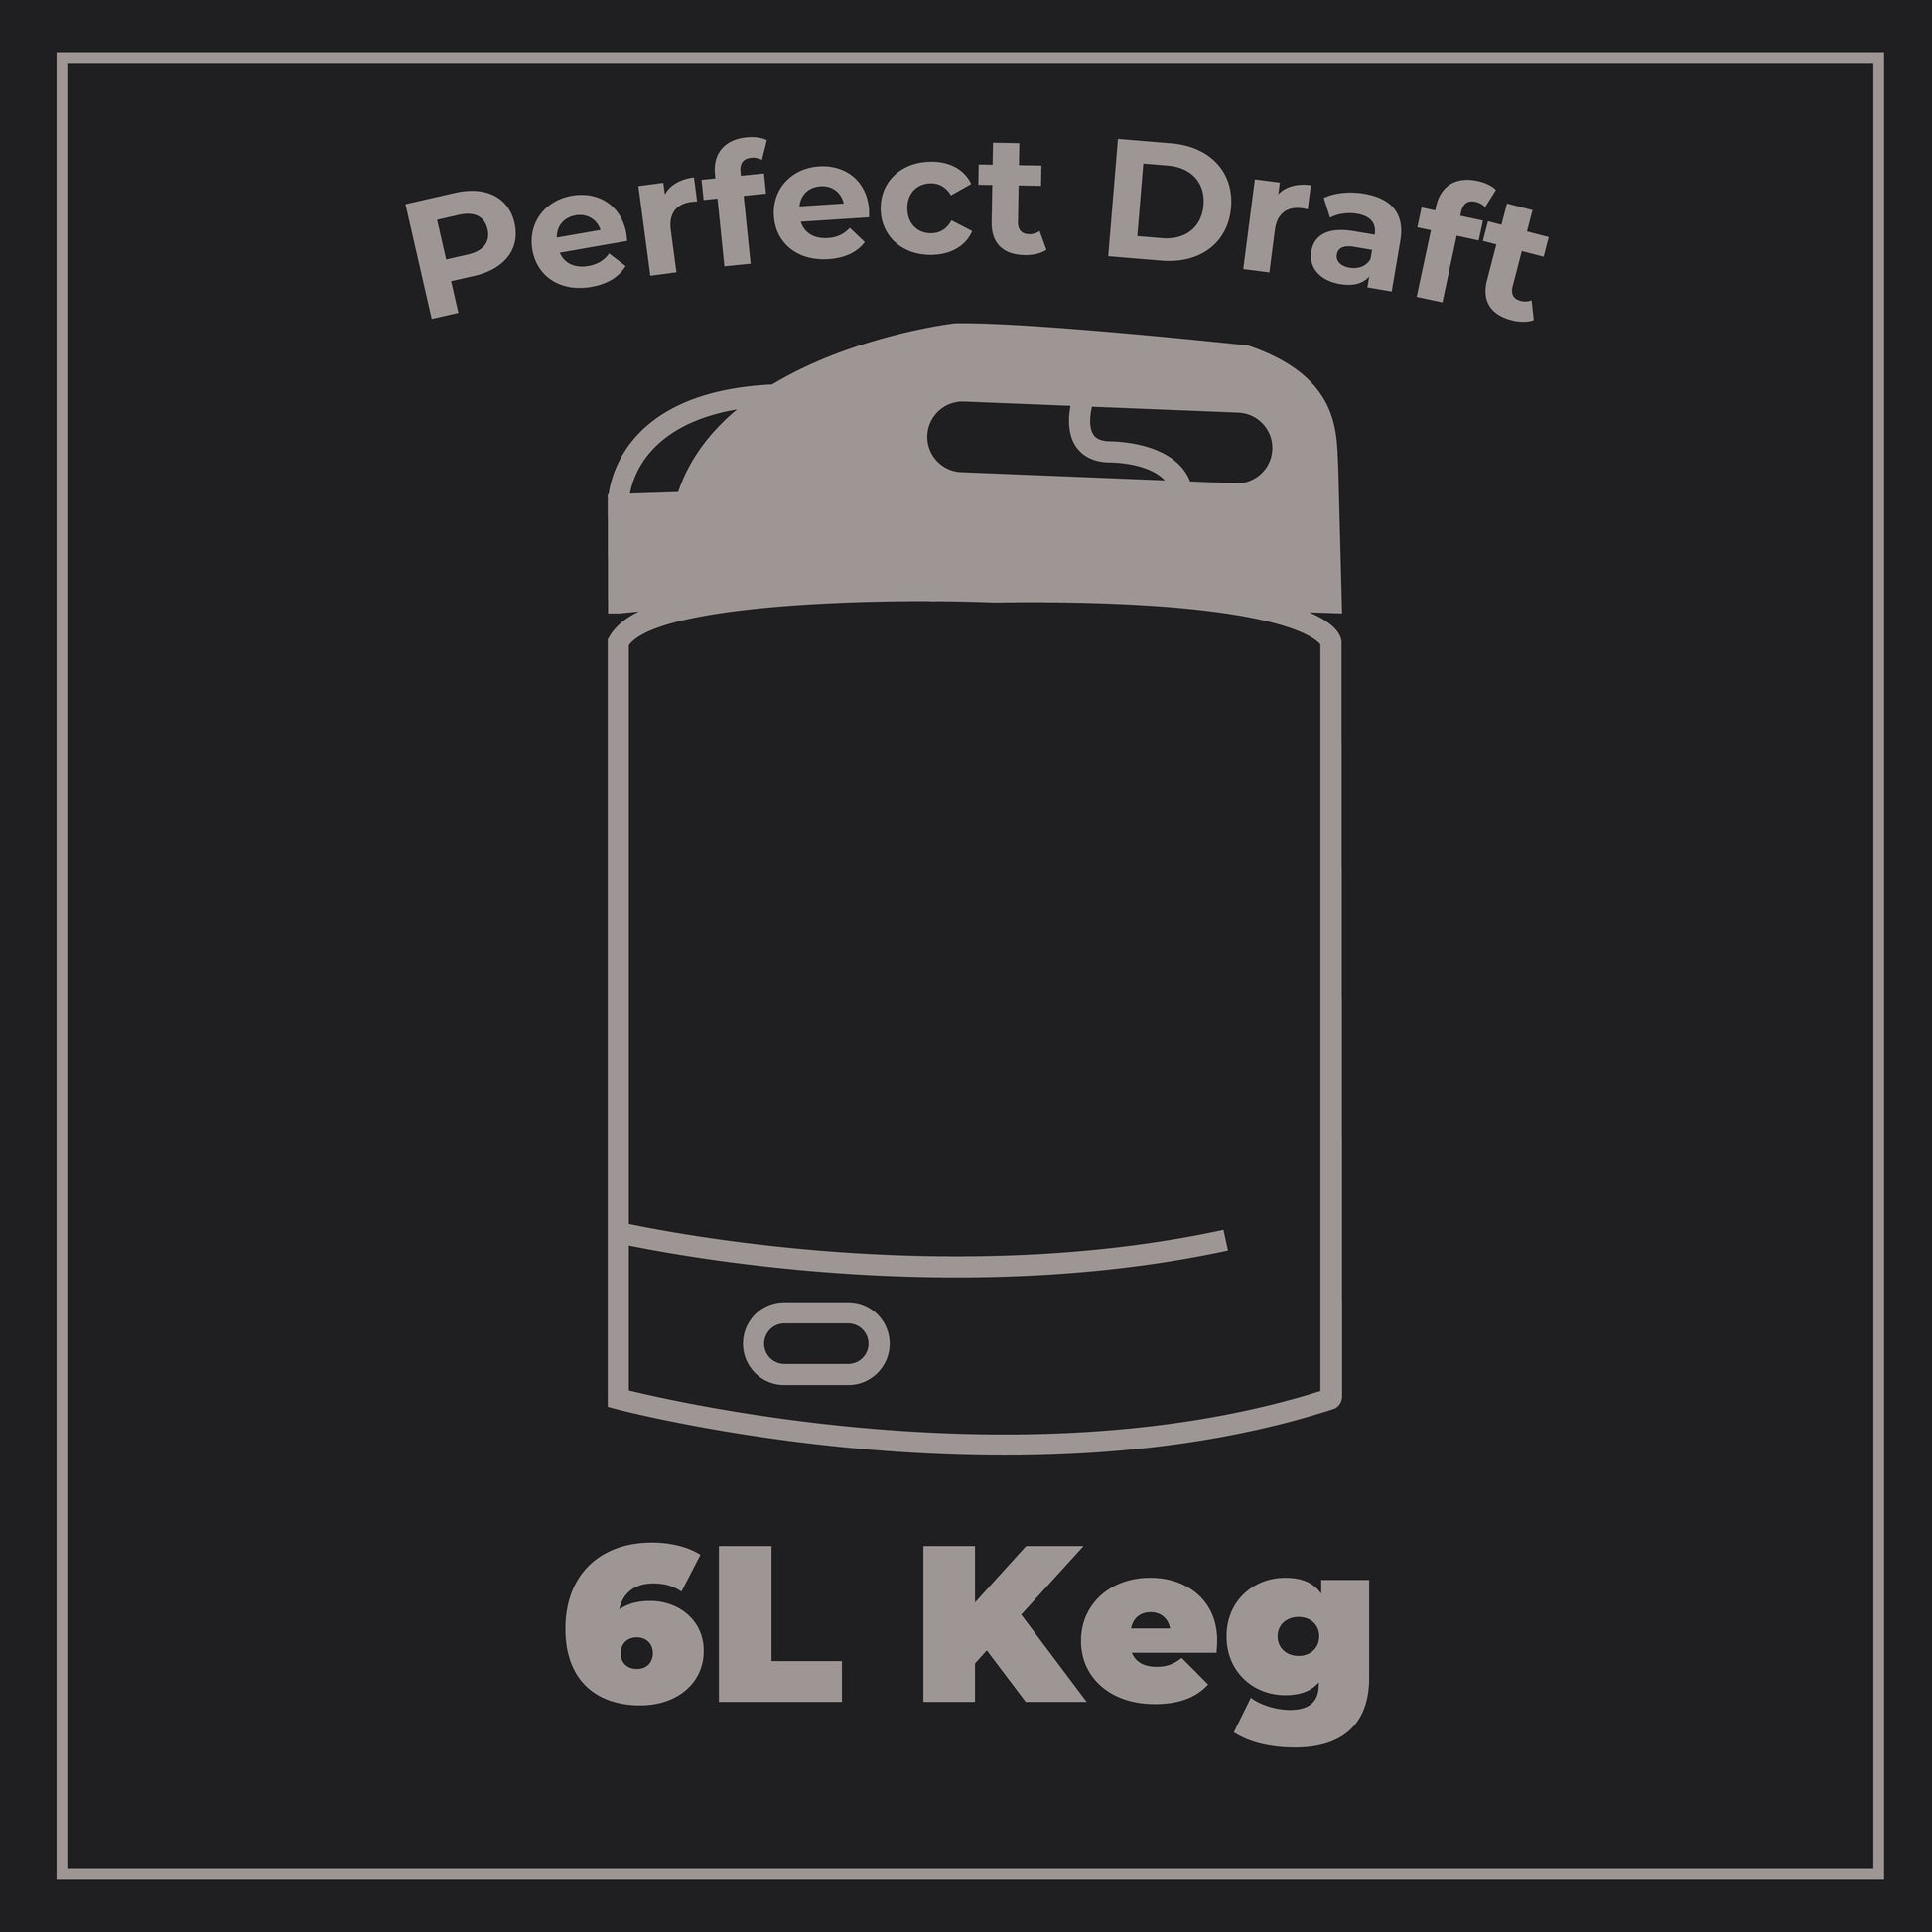 Camden Pale Ale PerfectDraft Keg - Pale Ale – 4% ABV - 6L PerfectDraft Keg